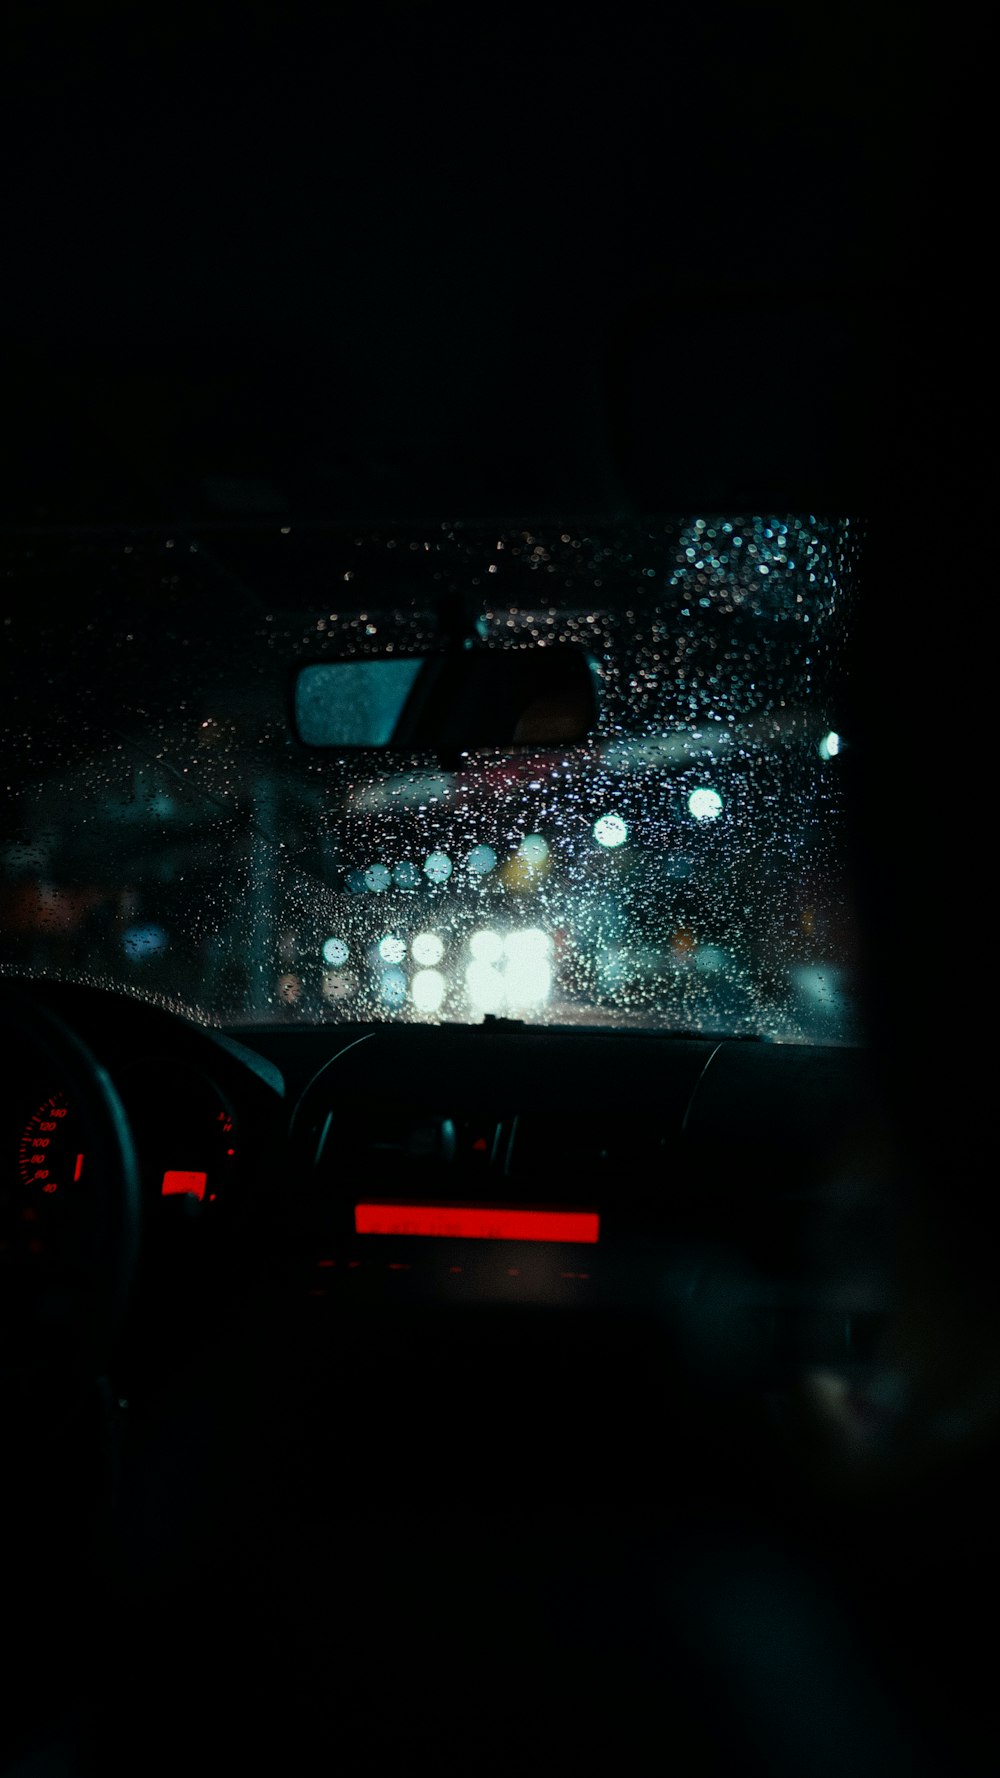 a car dashboard with rain on the windshield